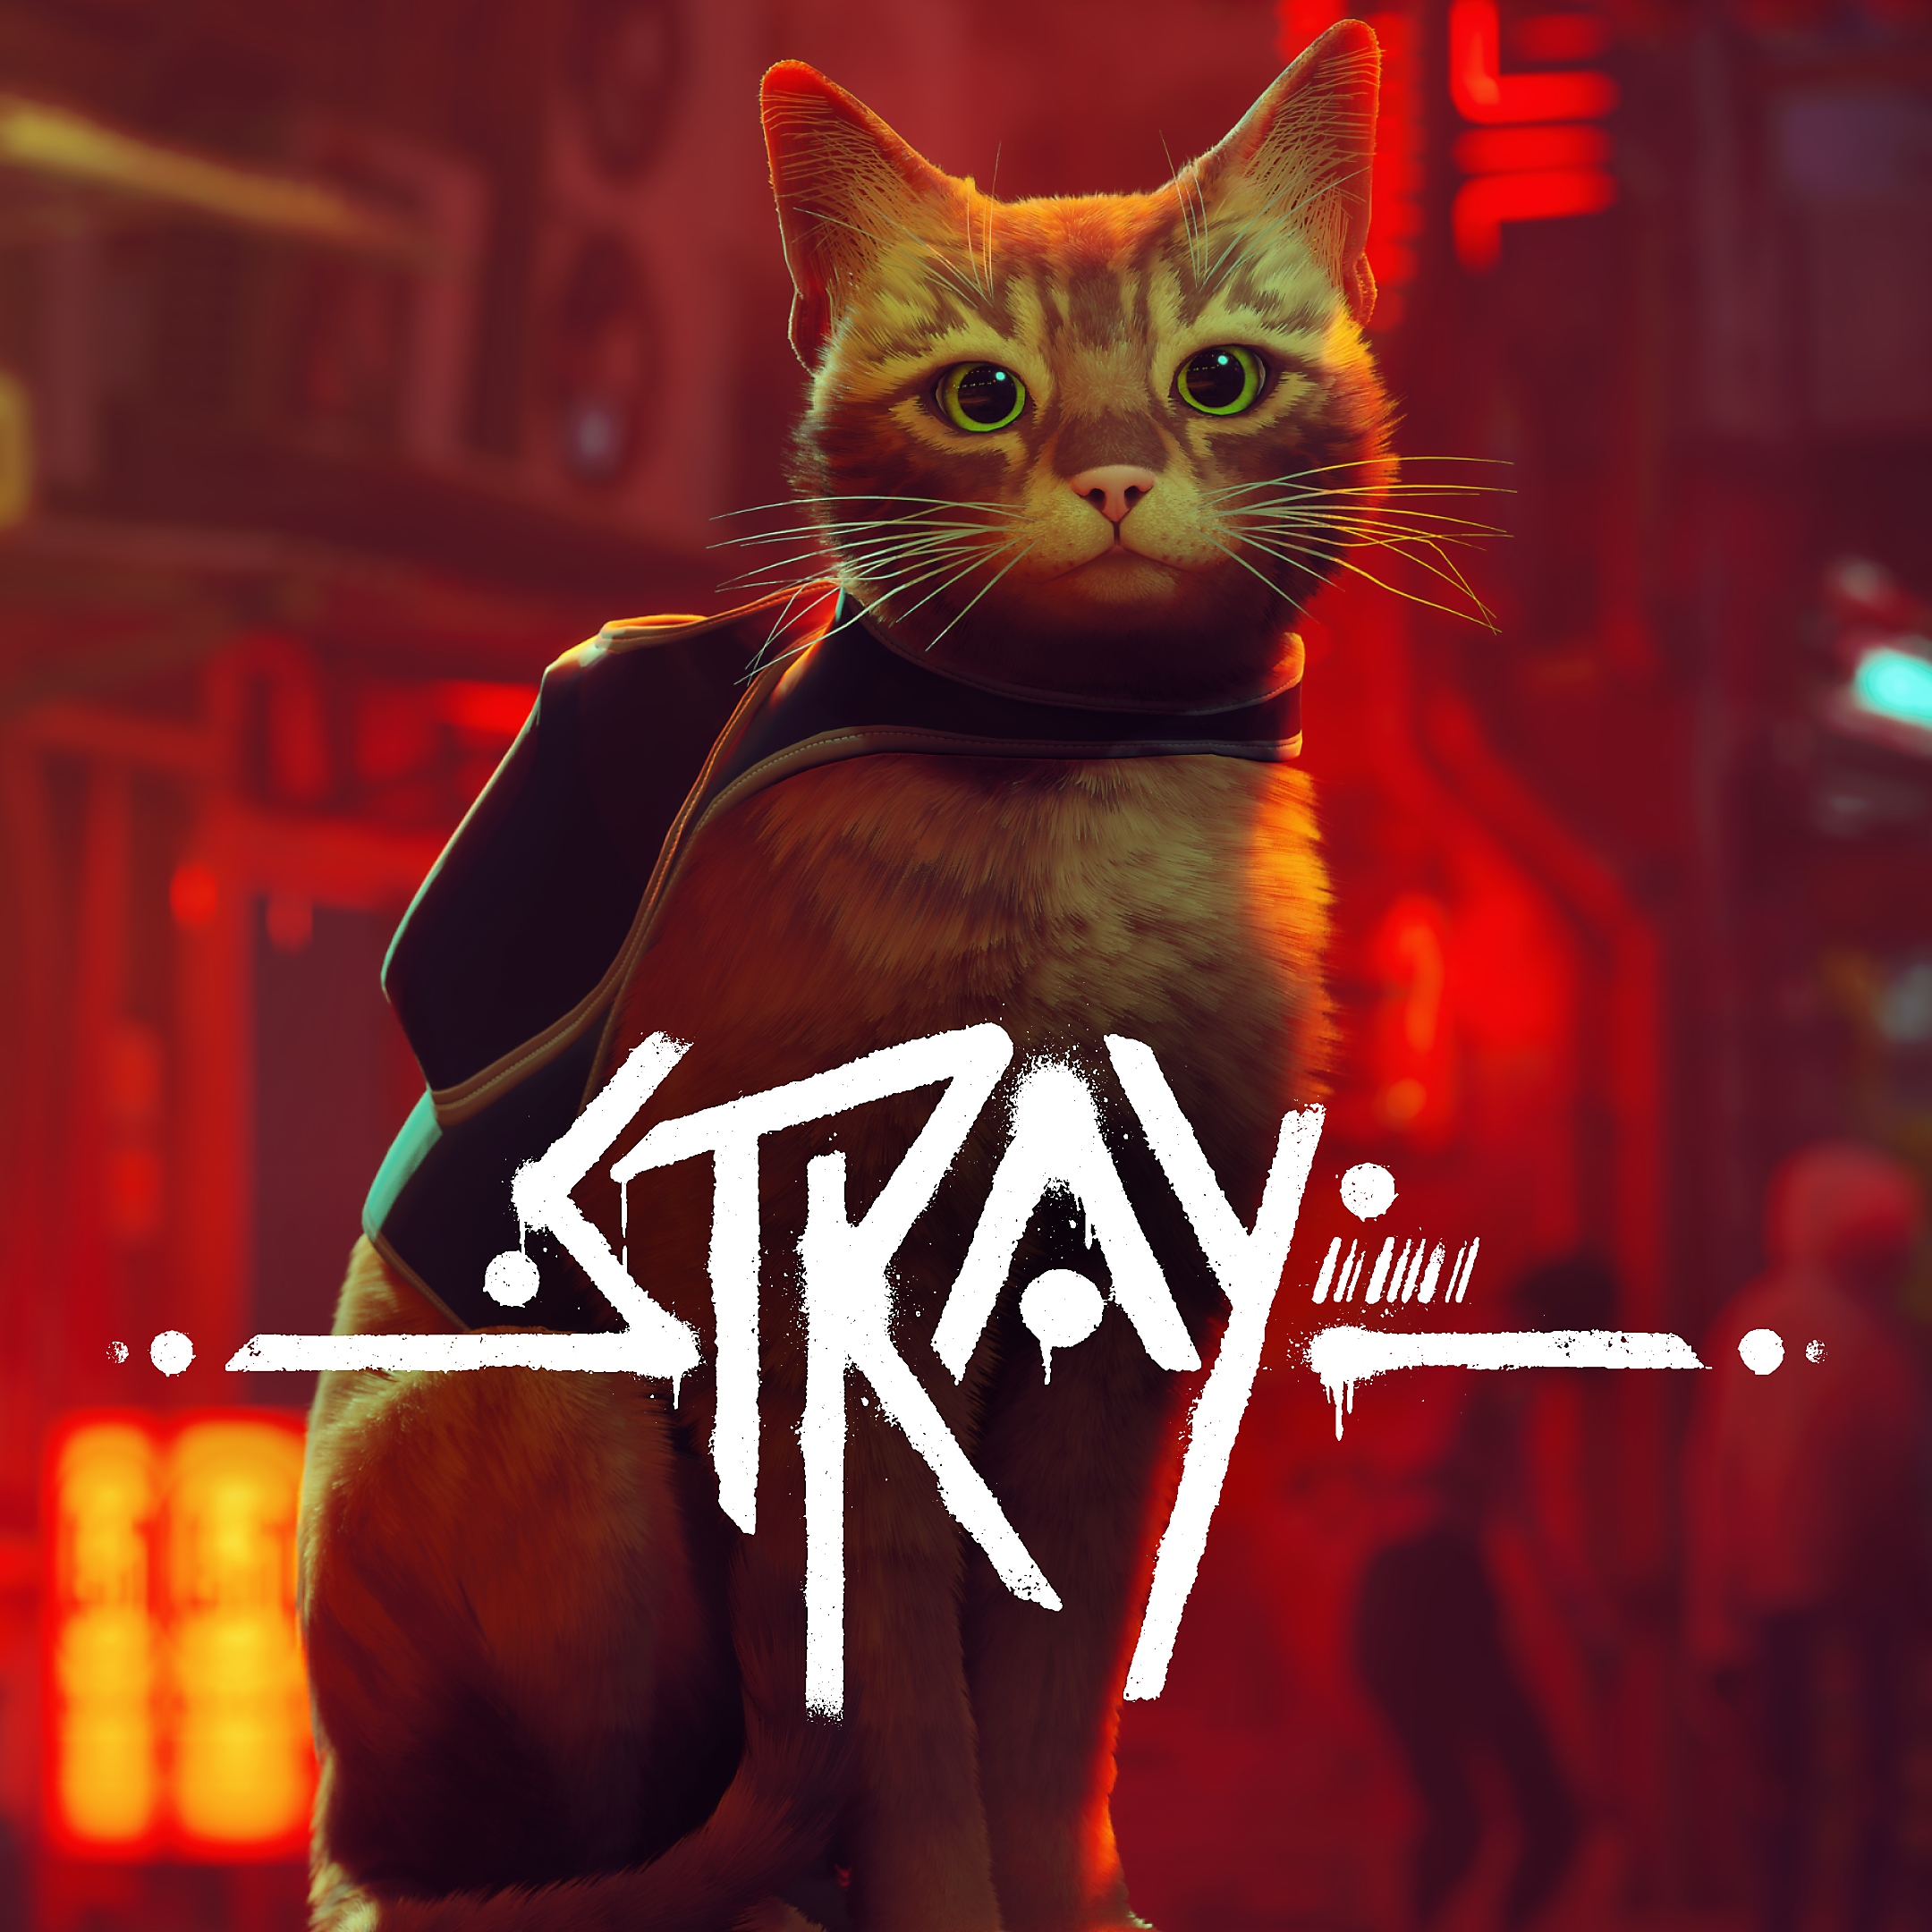 Stray artwork showing ginger cat